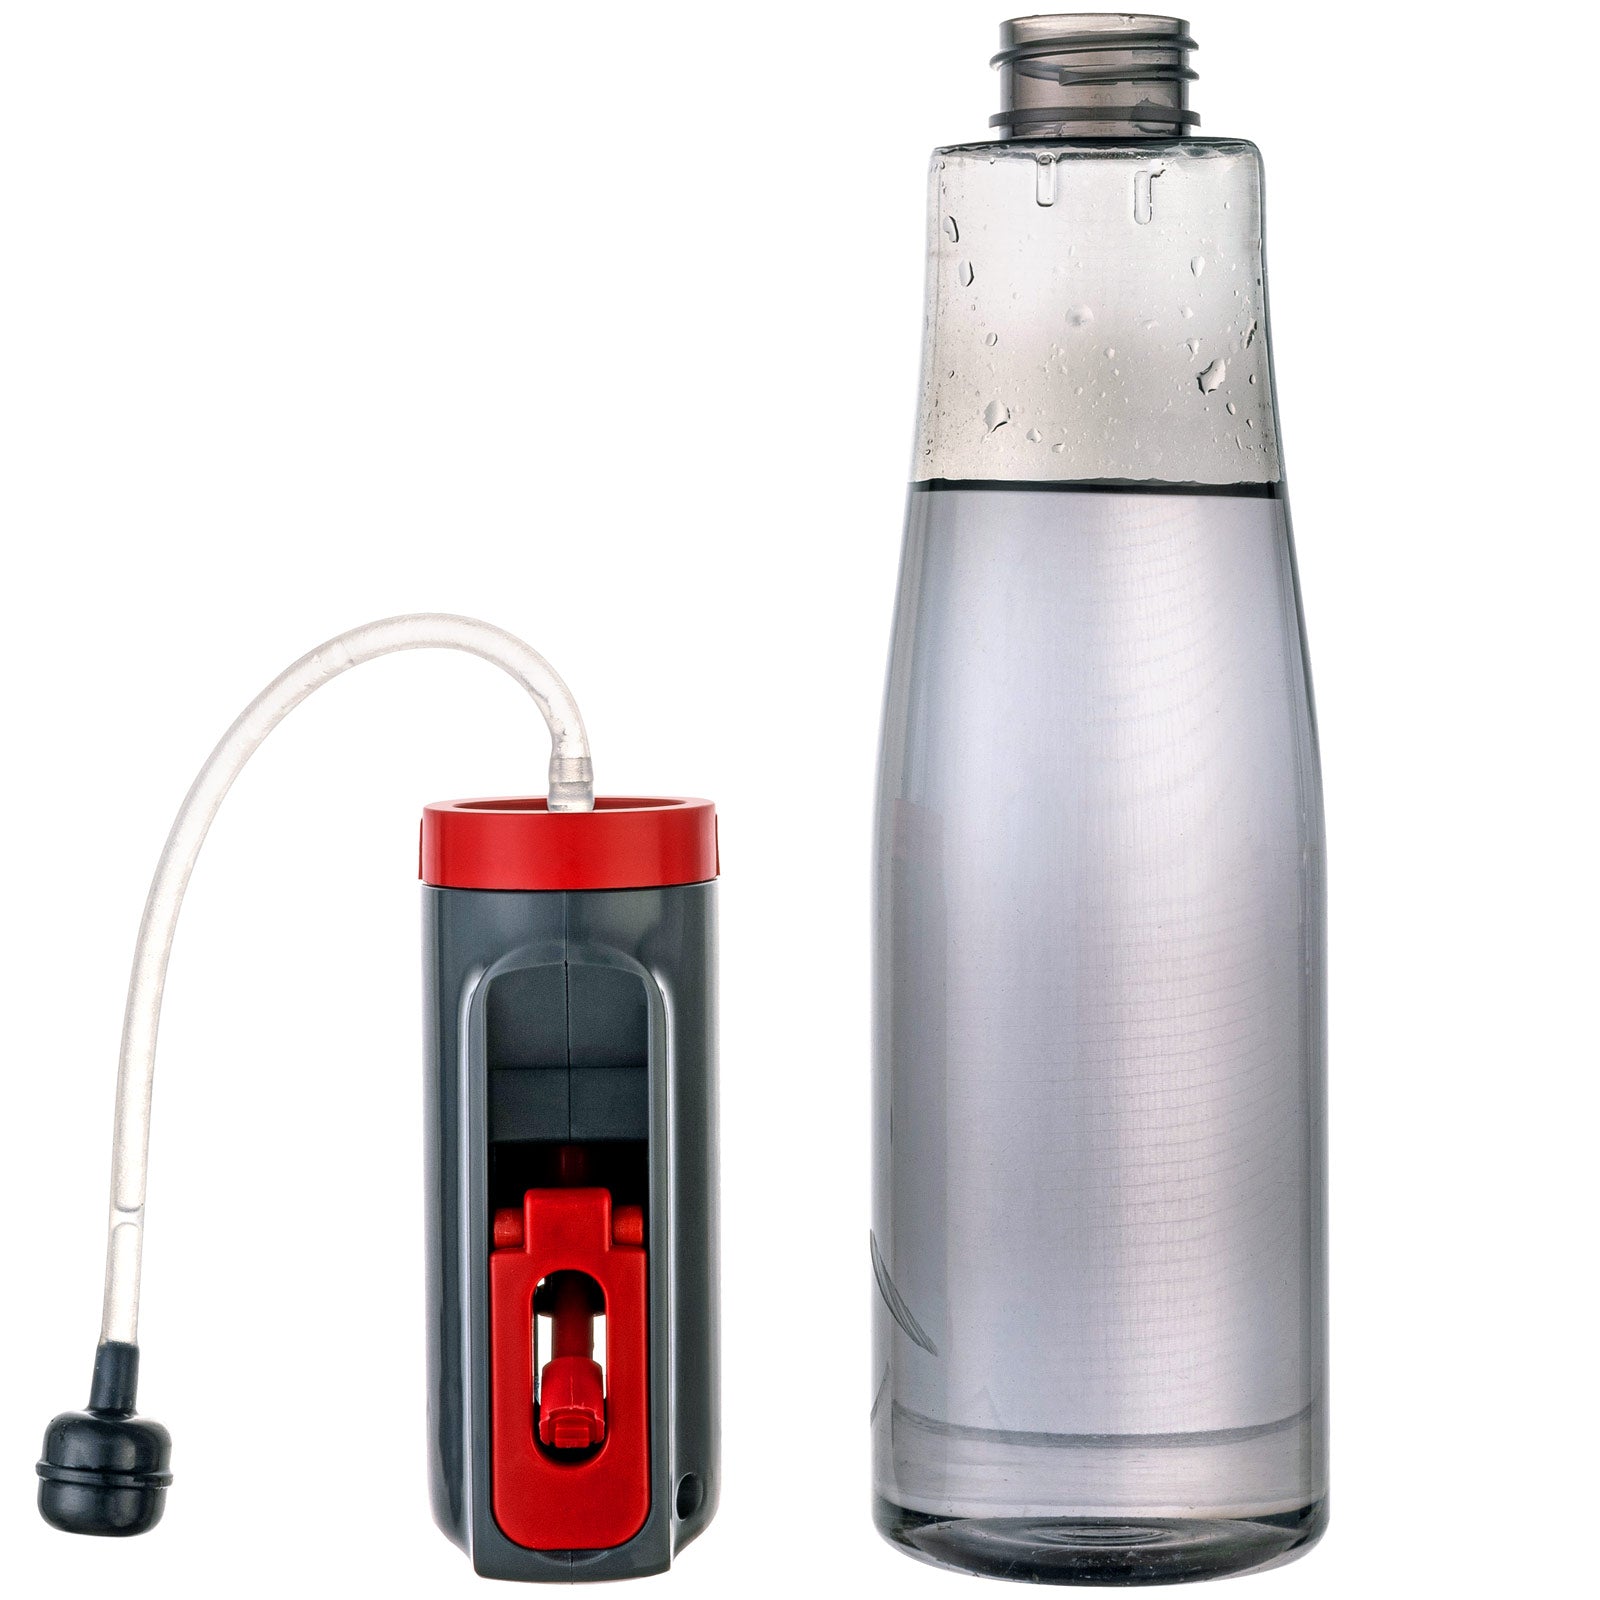 VENETIO ProSweep Spray Mop Refills - Replacement Bottle & Squeegee for Floor / Window Cleaning, Pack of 1